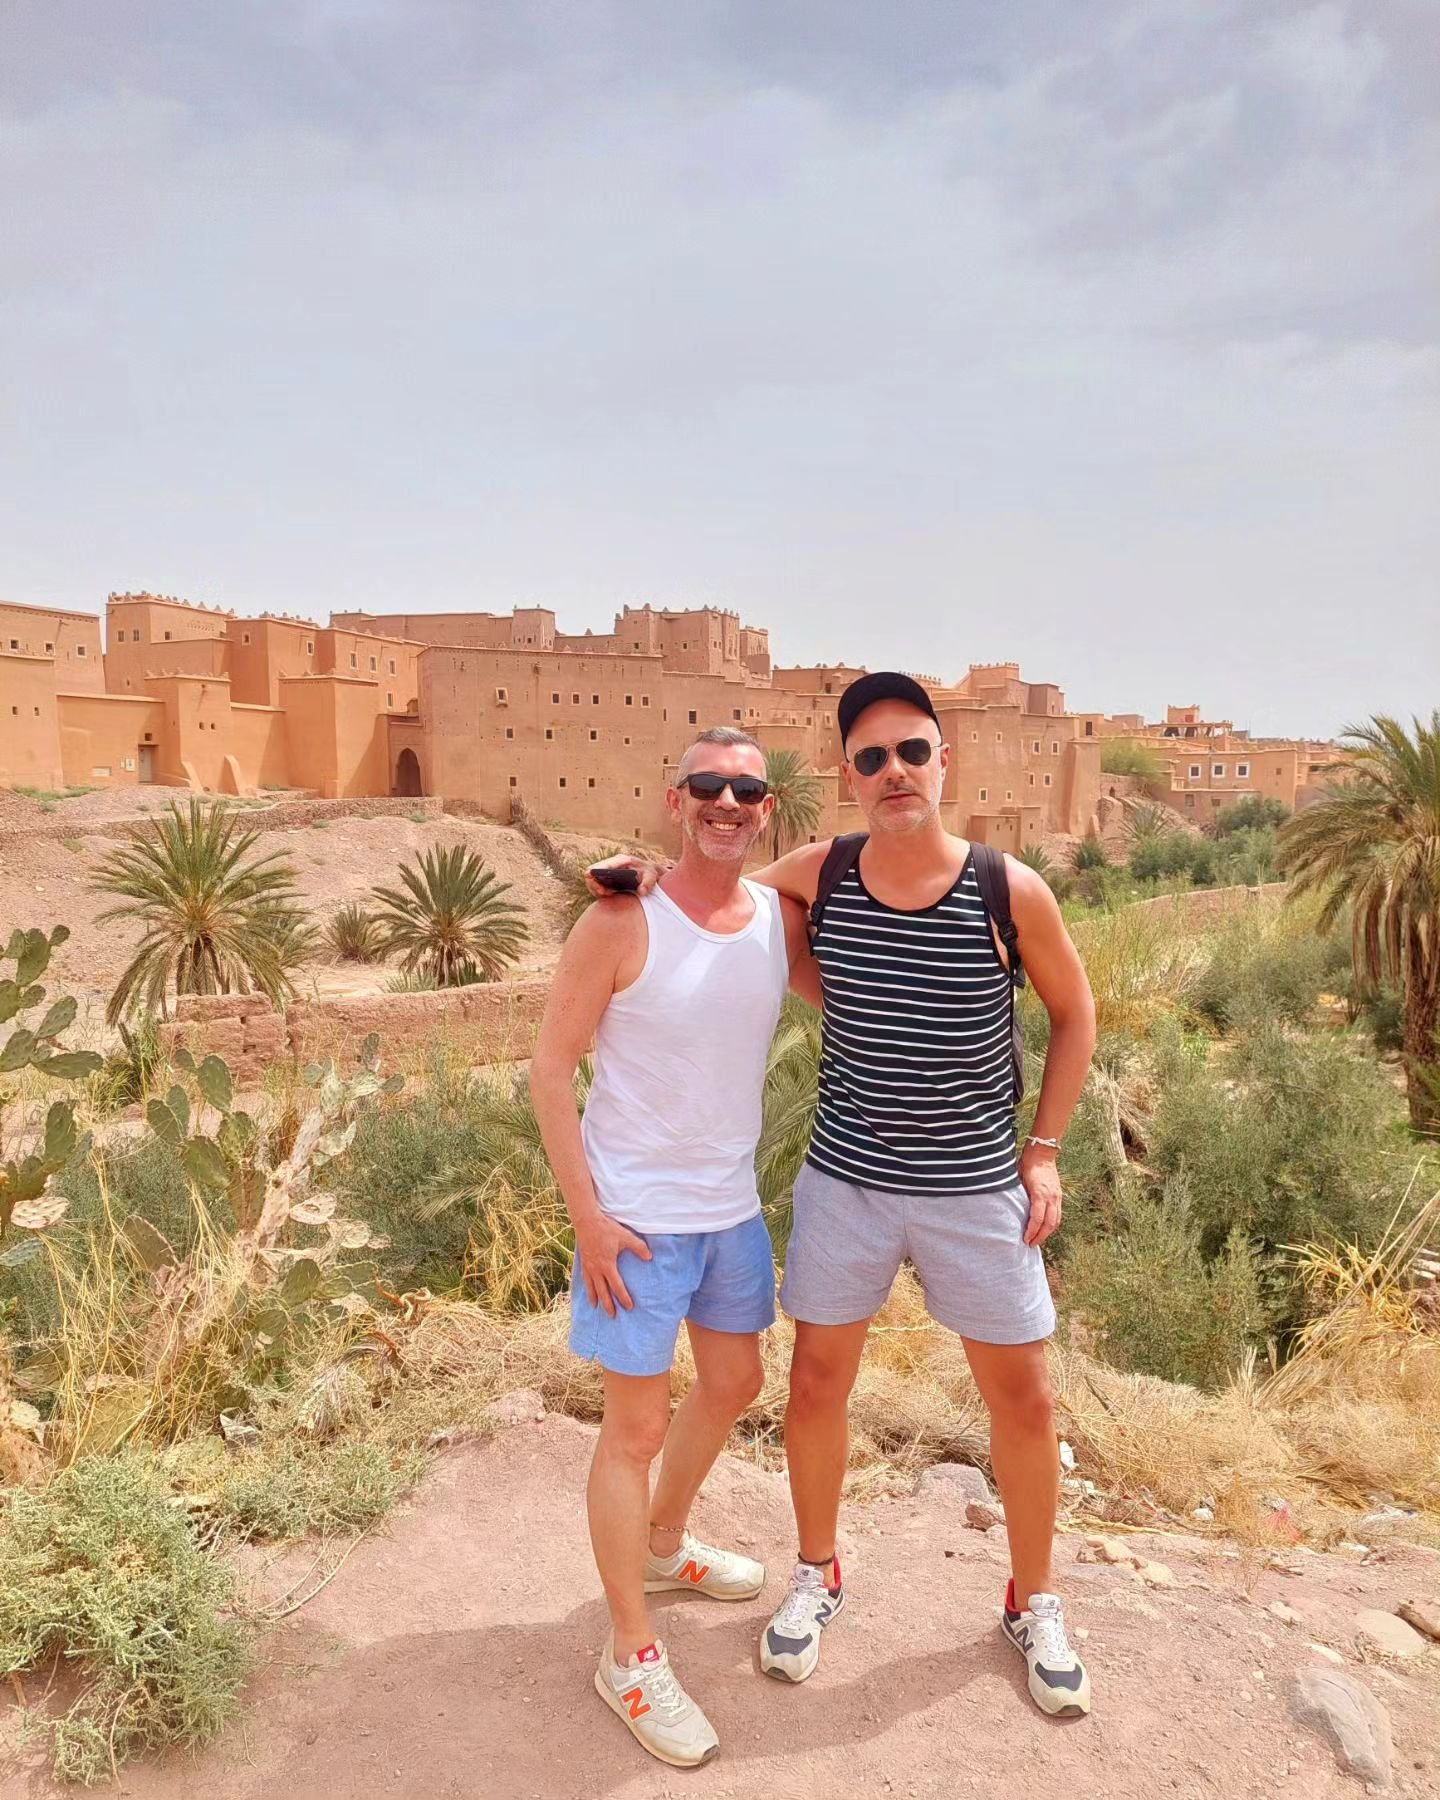 Hello Ouarzazate 😎
Ouarzazate nicknamed the door of the desert, is a city and capital of Ouarzazate Province! 

🏳️&zwj;🌈 Artur &amp; Jorge 👬 #gaymenonthego 

🏳️&zwj;🌈 Visit www.gaymenonthego.com 

#Morocco #marrakesh #marrakech #jemaaelfnaa #ma